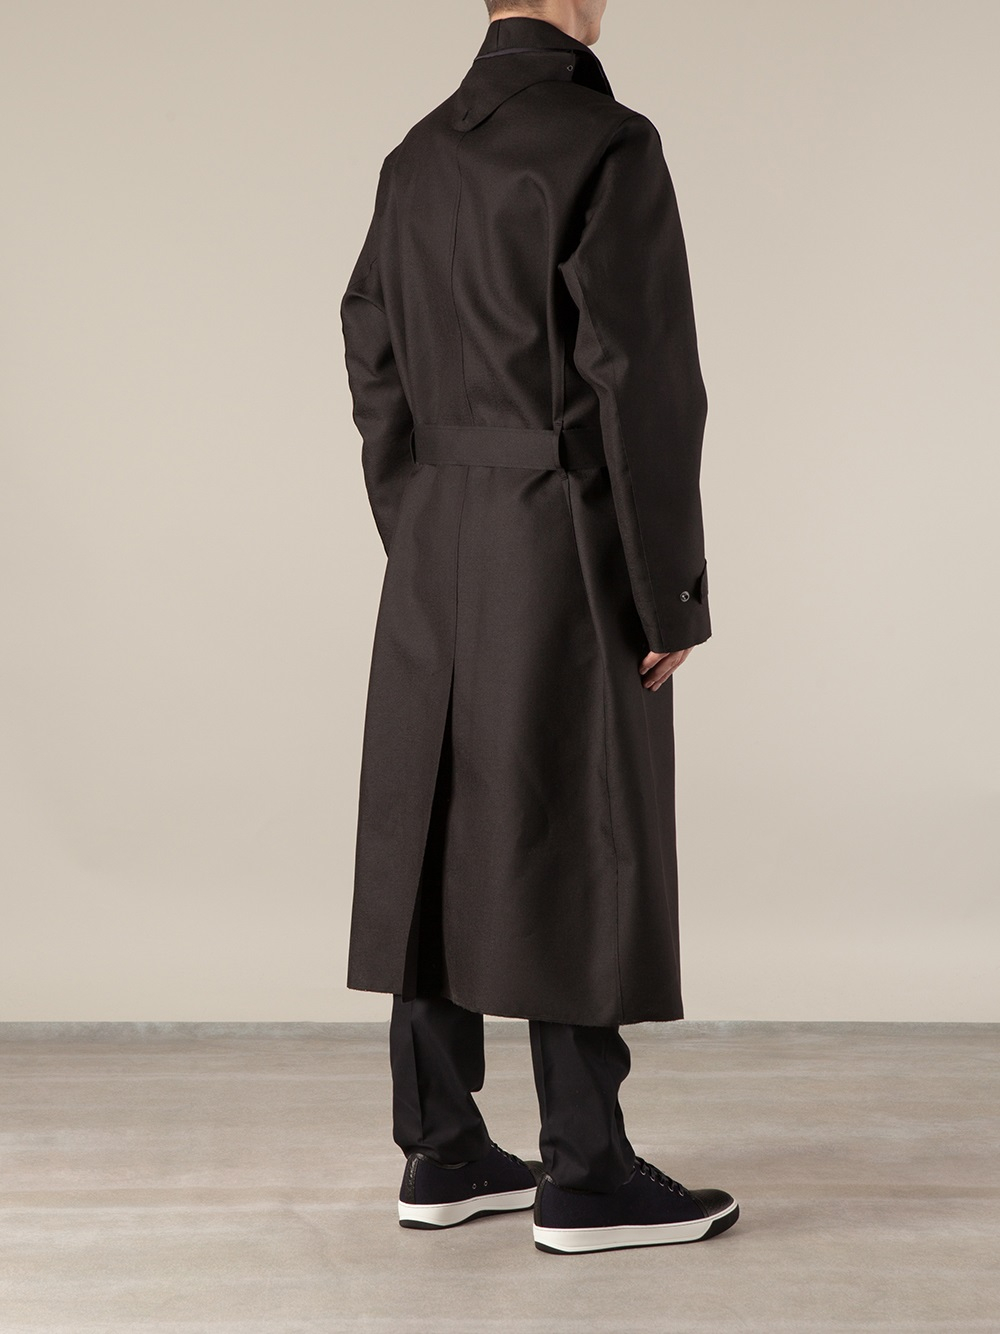 Lanvin Funnel Neck Trench Coat in Black for Men - Lyst